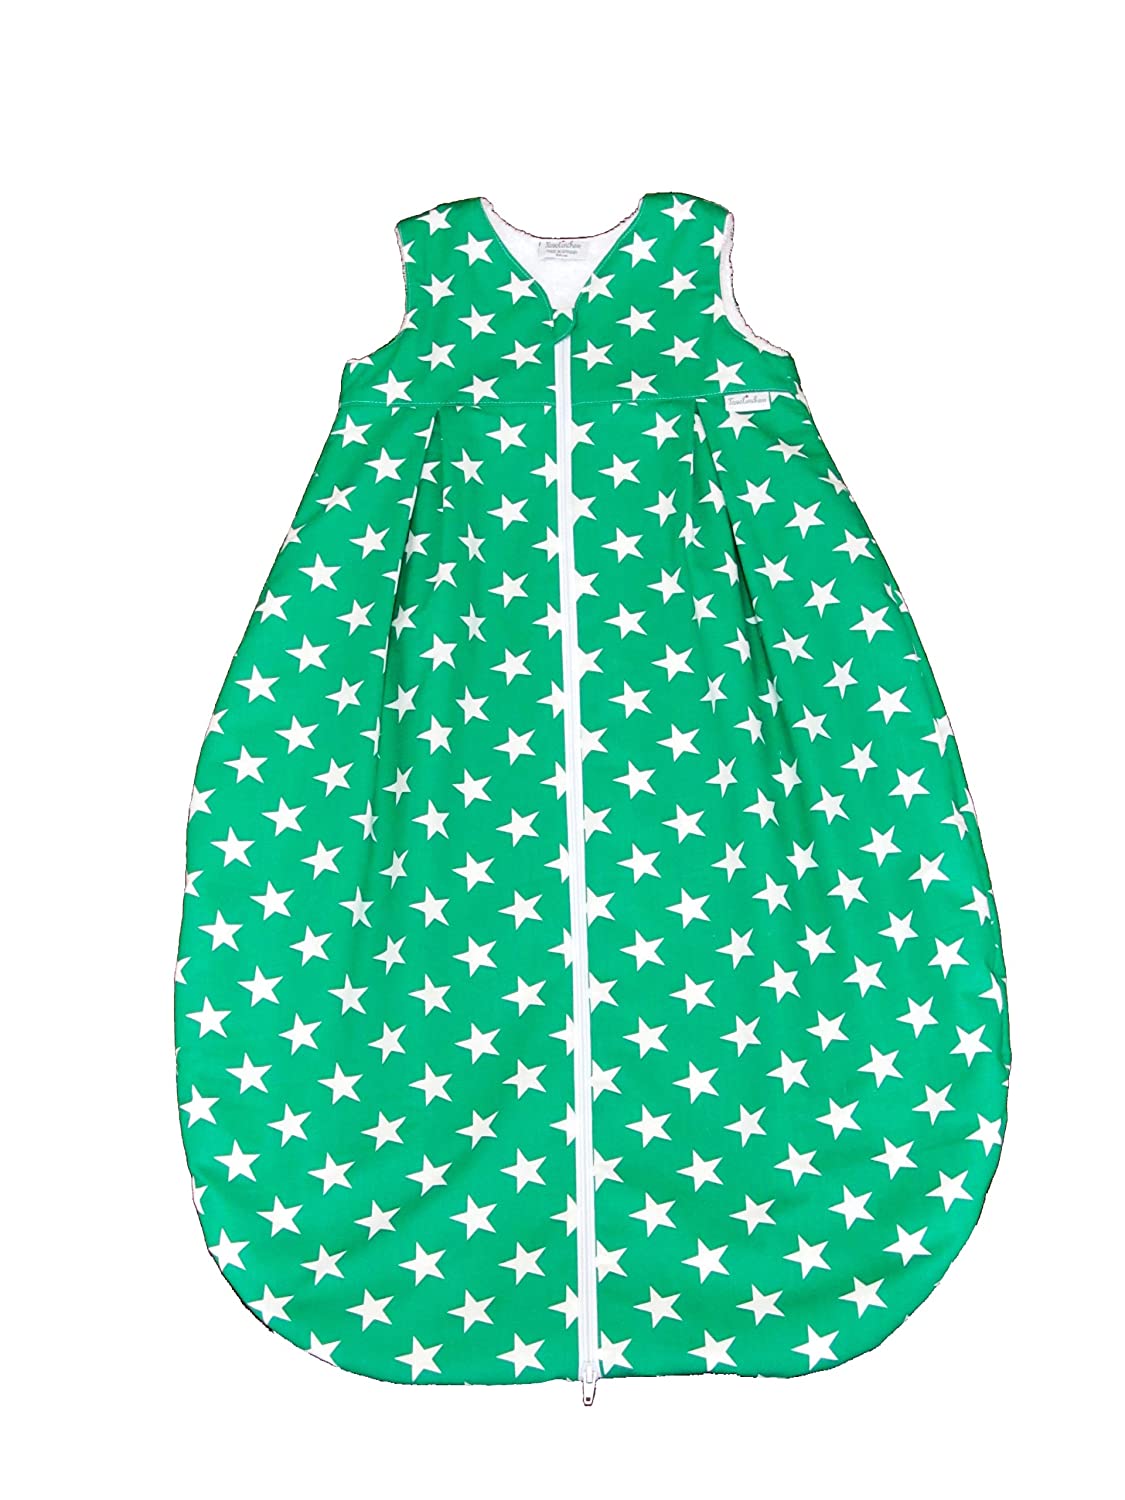 Tavolinchen 35/85 Terry Cloth Sleeping Bag with Stars Design Green 110 cm